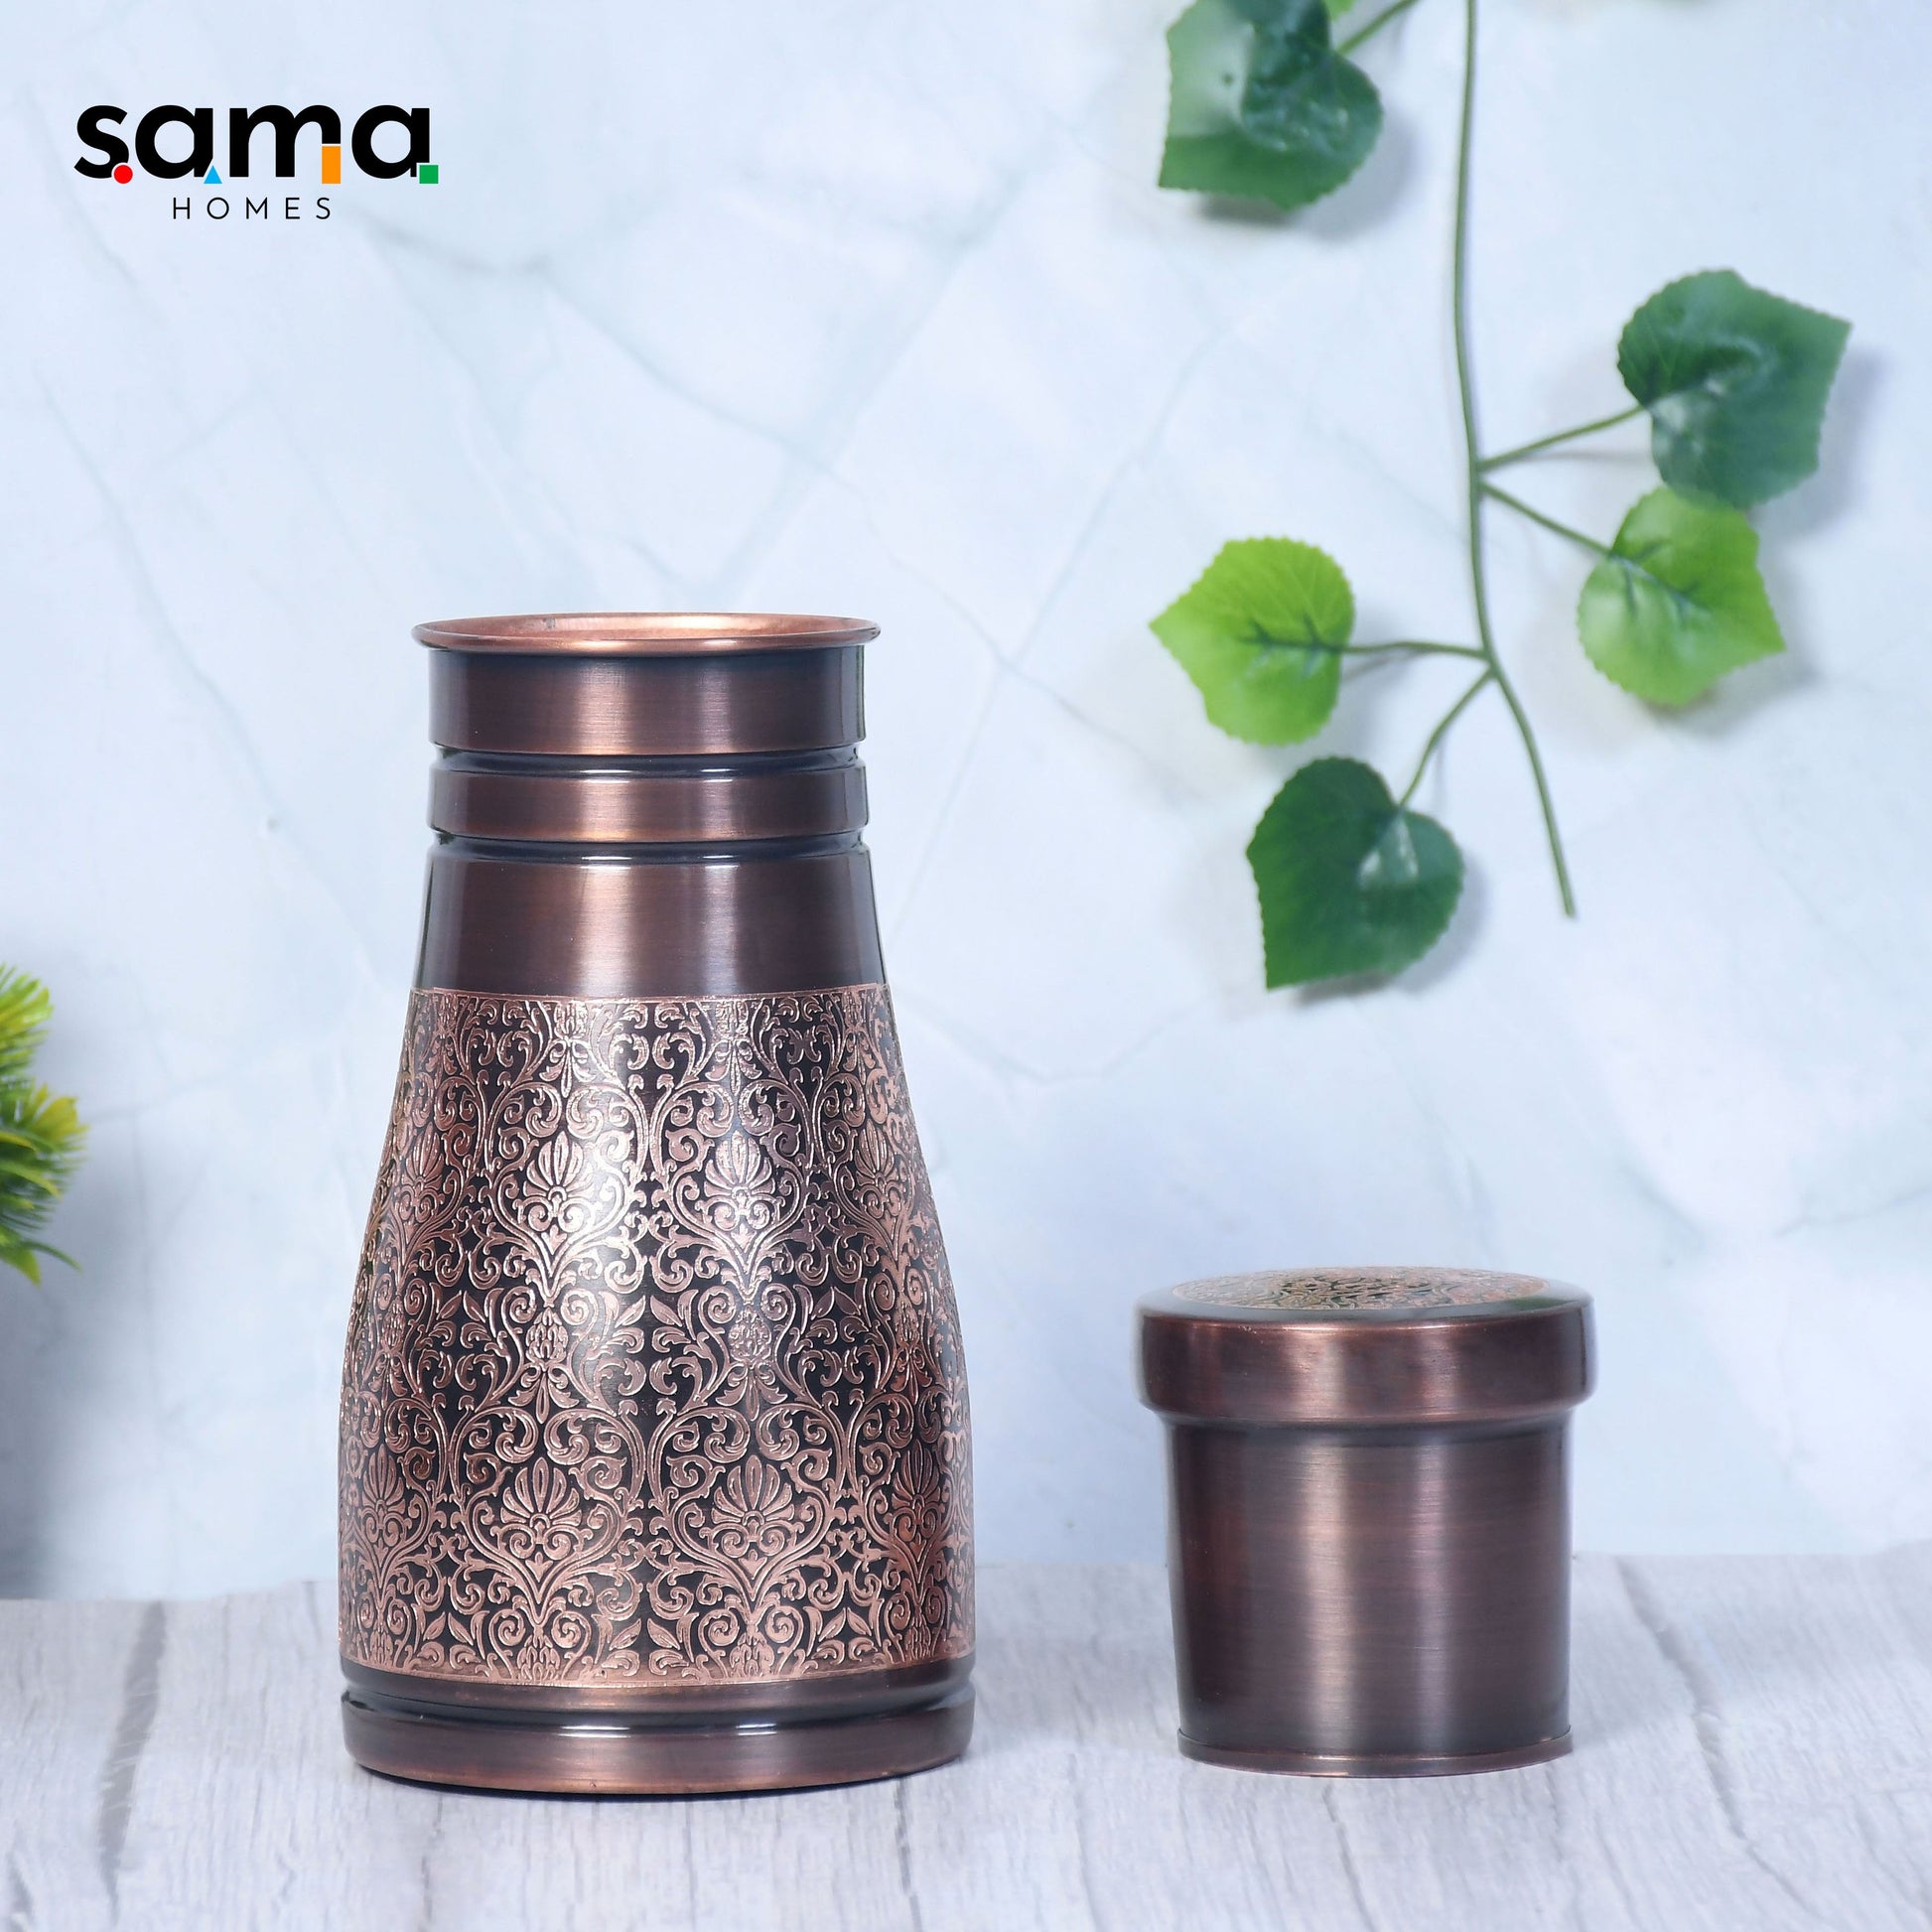 SAMA Homes - pure copper silk black bedside jar with antiqued black etching inbuilt glass capacity 1000ml